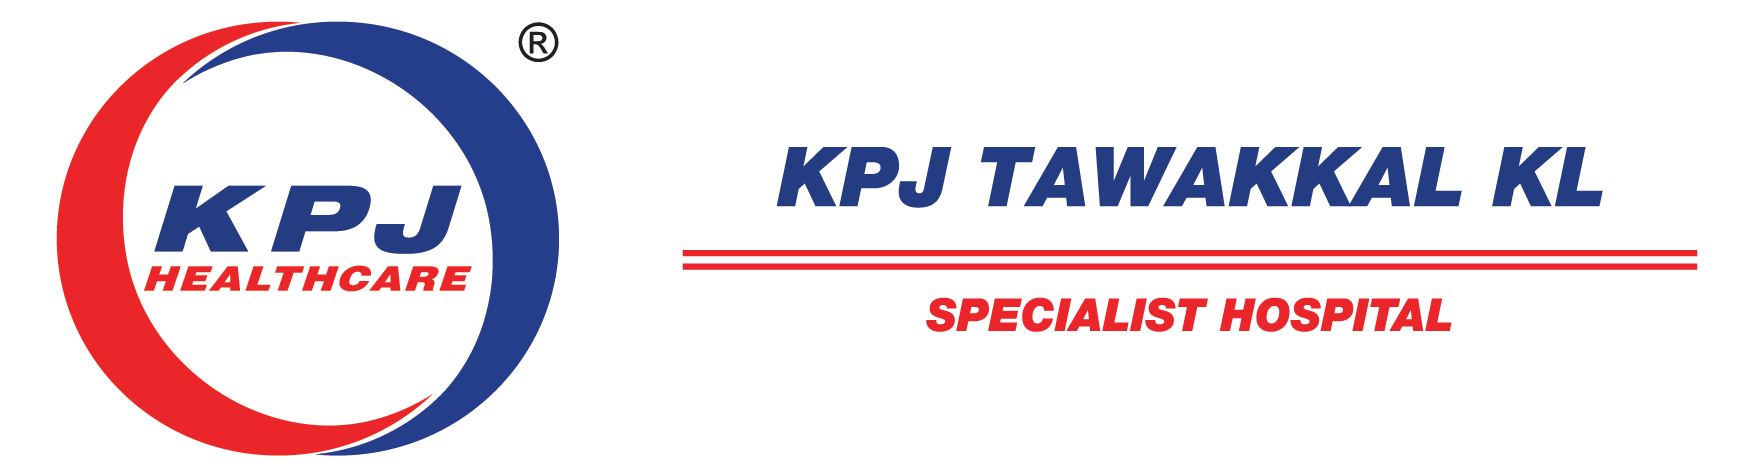 Kl kpj hospital tawakkal specialist Customer Reviews